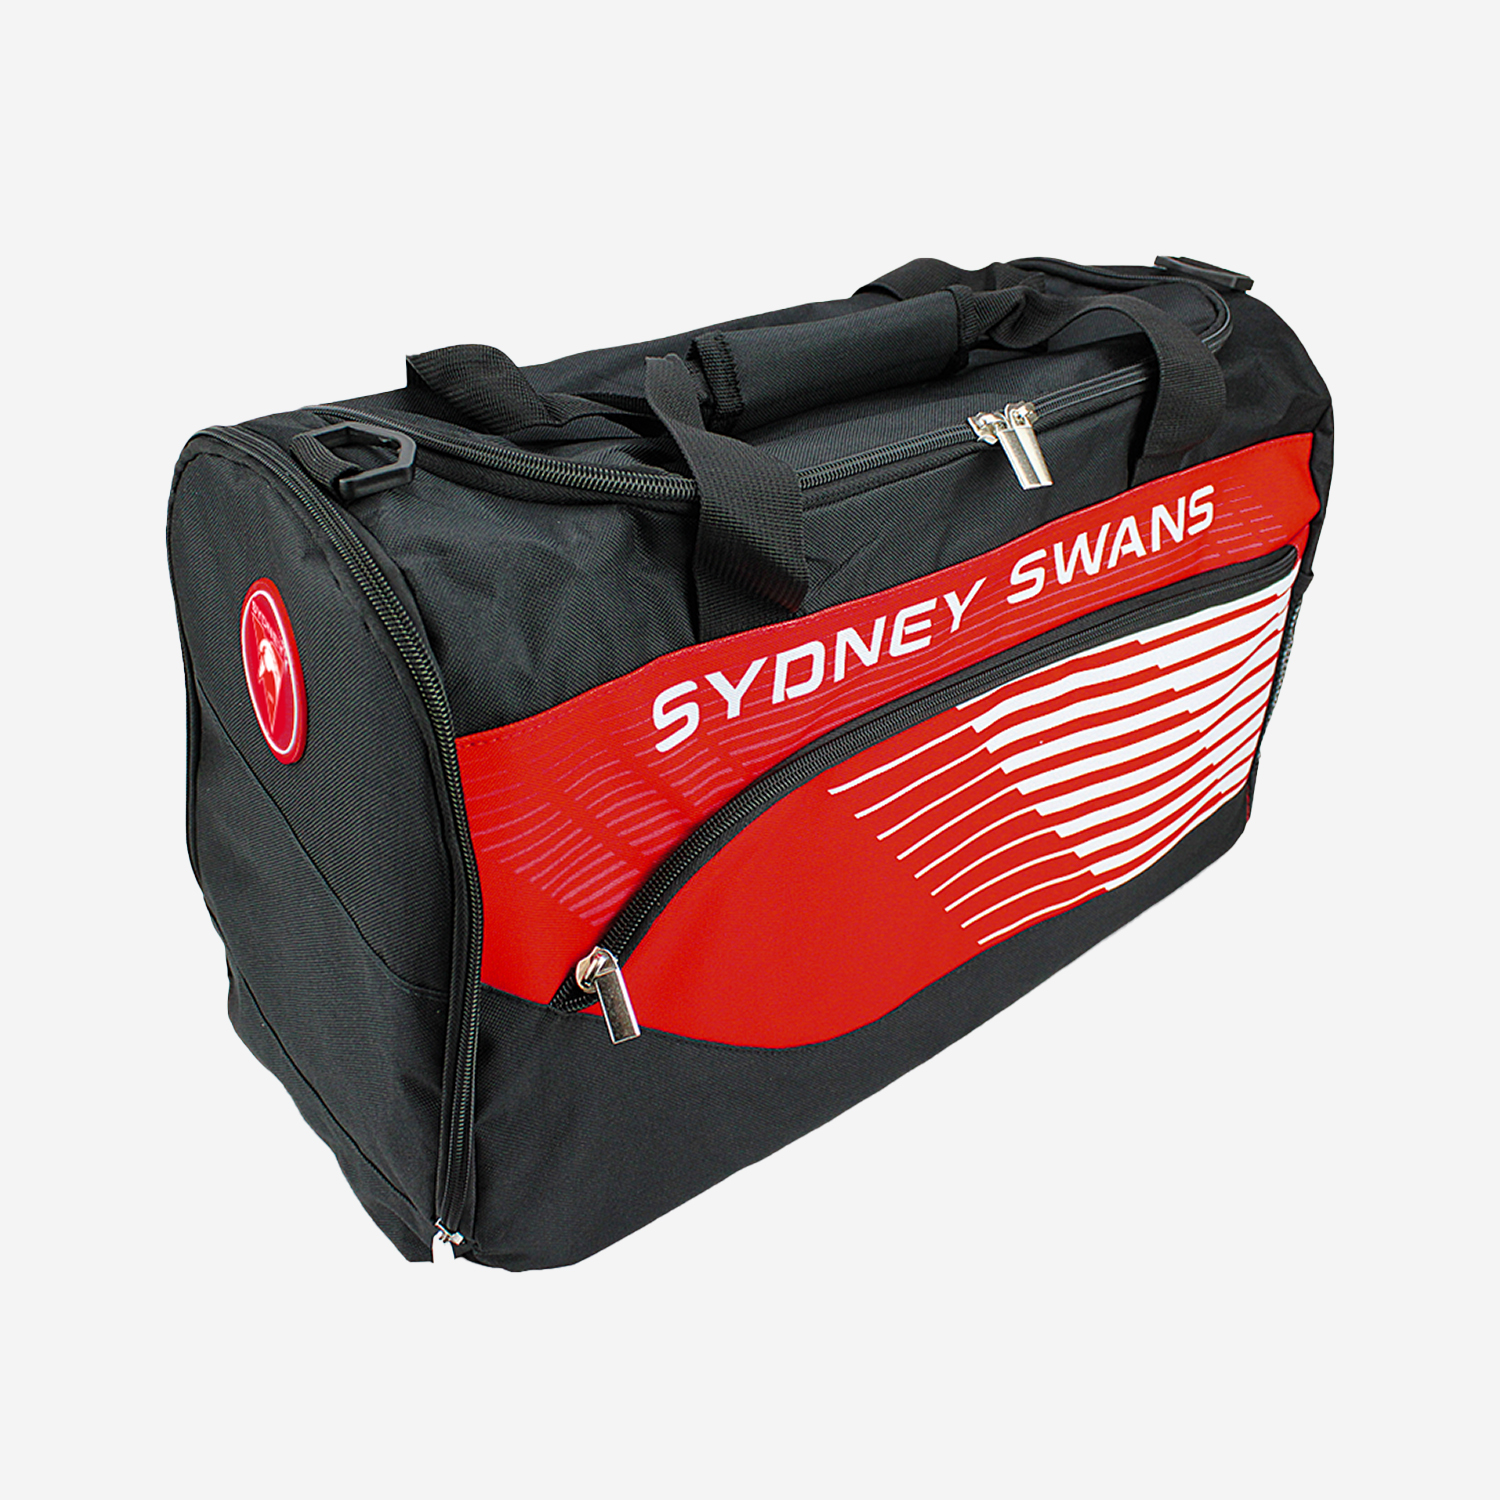 Sydney Swans Bag